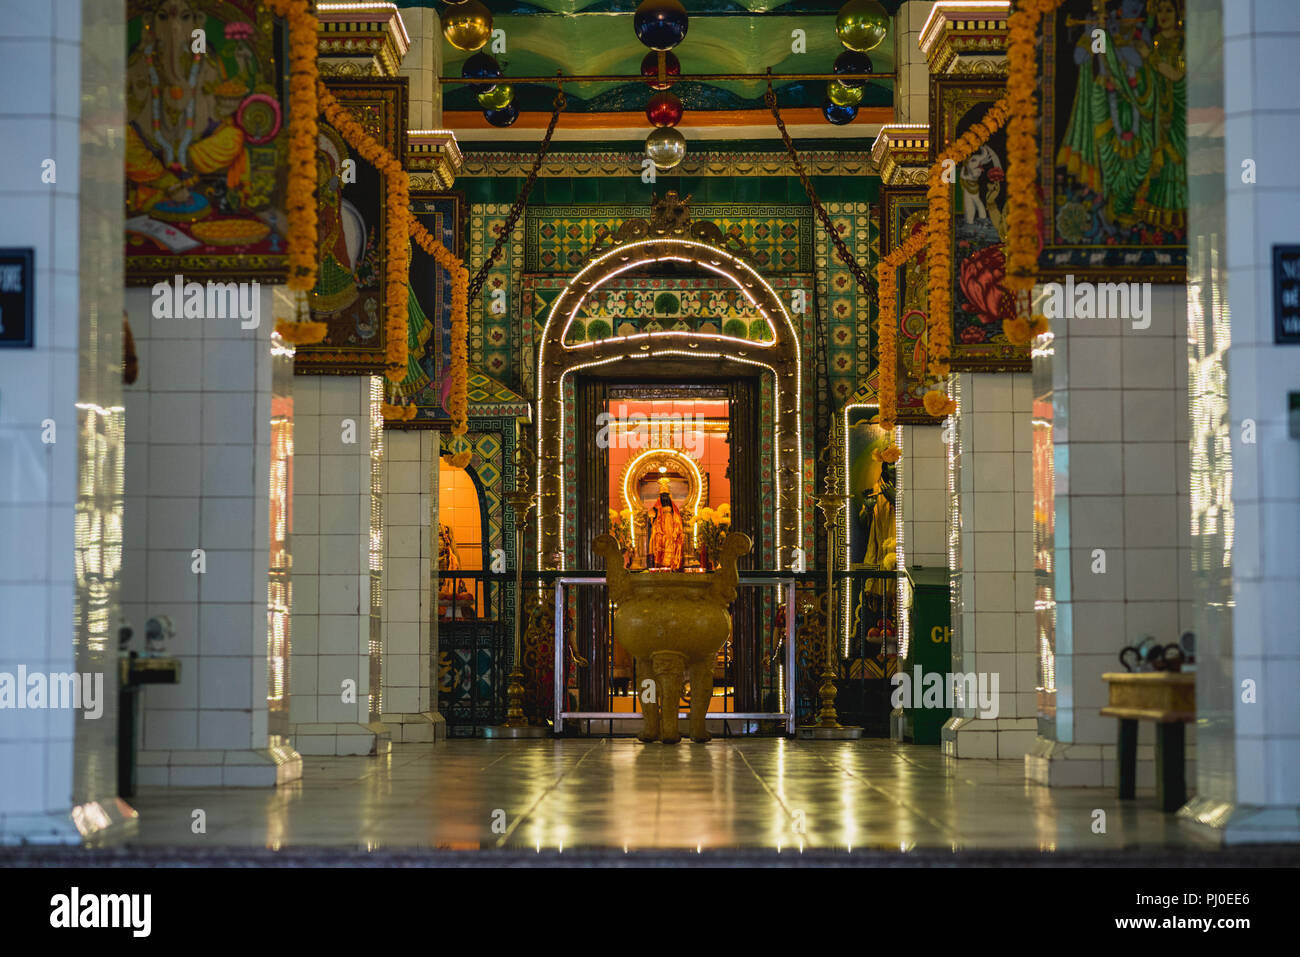 Innenraum eines Hindu Tempel (Tempel/Sri Sri Thendayuthapani Thendayyuttha Pani) in Ho Chi Minh City, Vietnam. Blick von Tonne, dass Thiep Straße Stockfoto